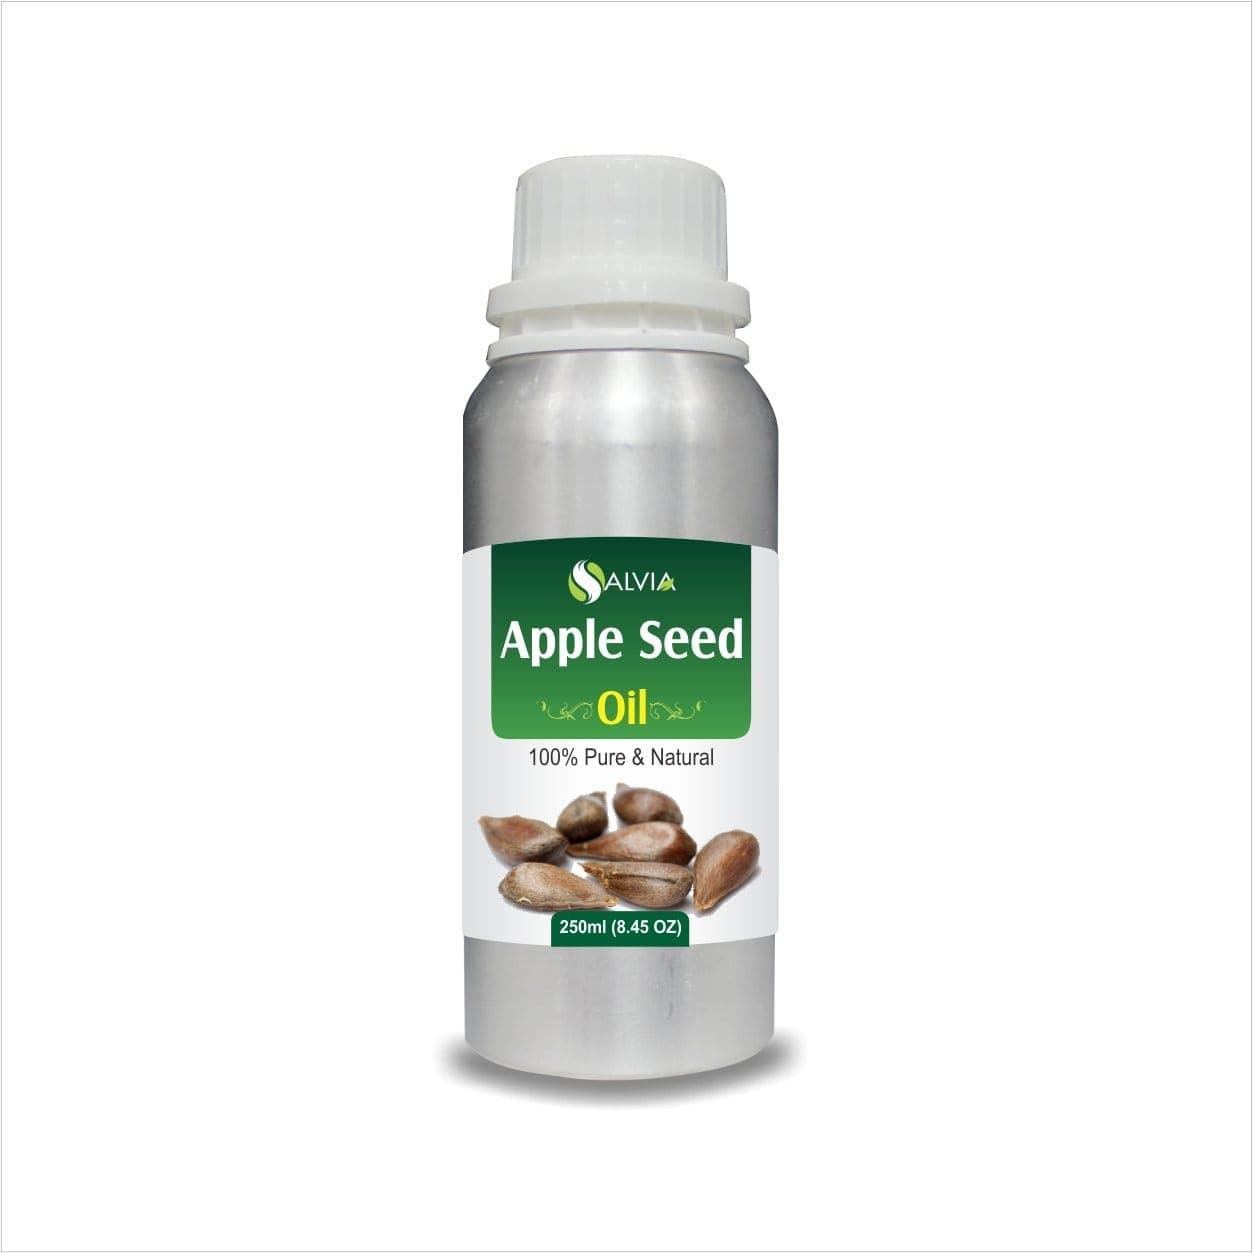 apple seed oil benefits